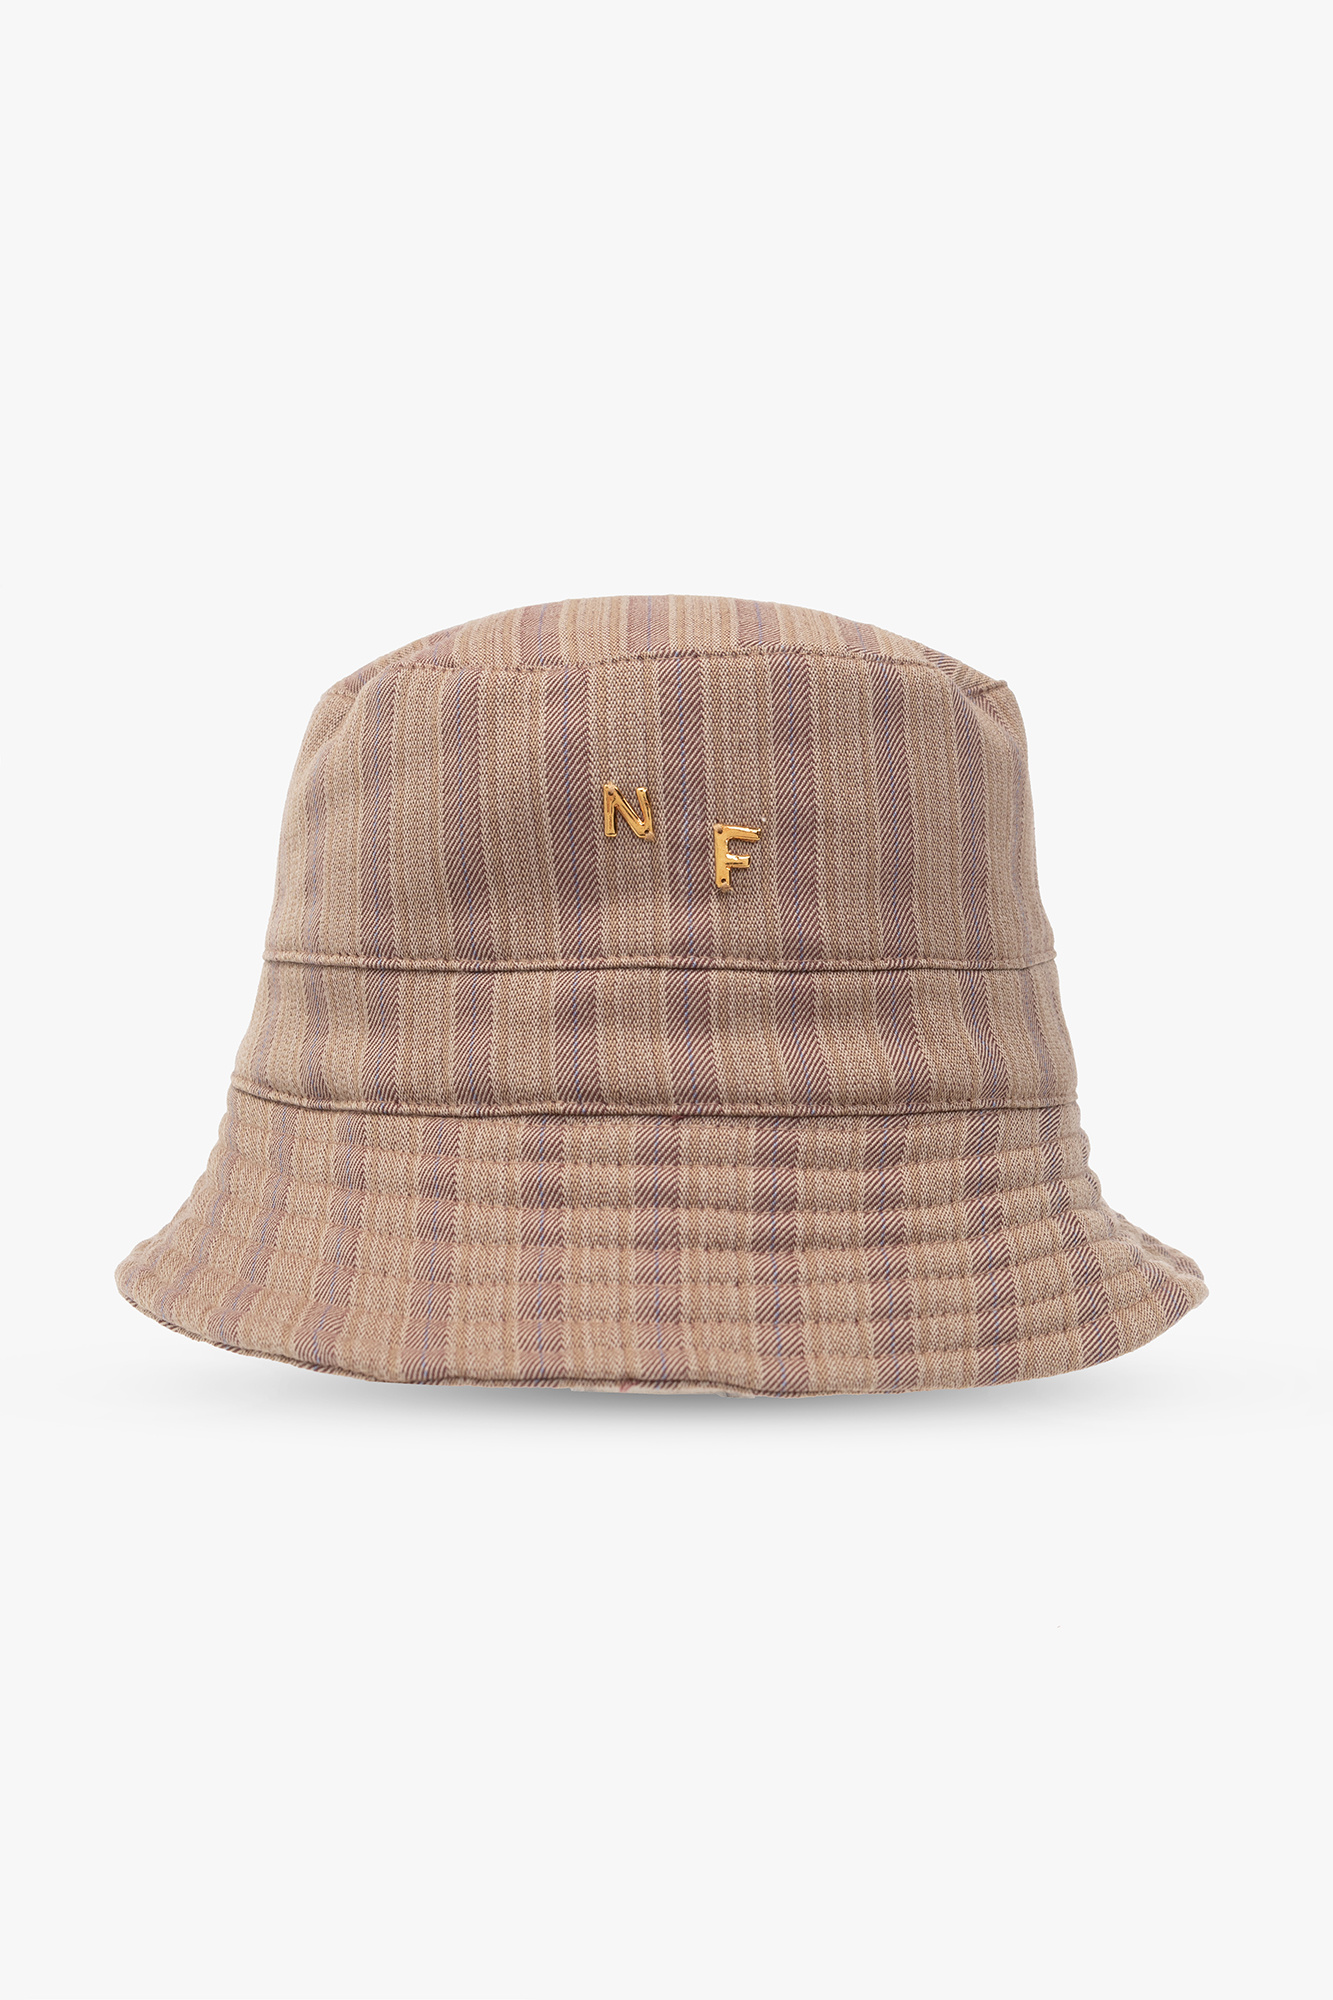 Nick Fouquet Hat with logo | Men's Accessories | Vitkac